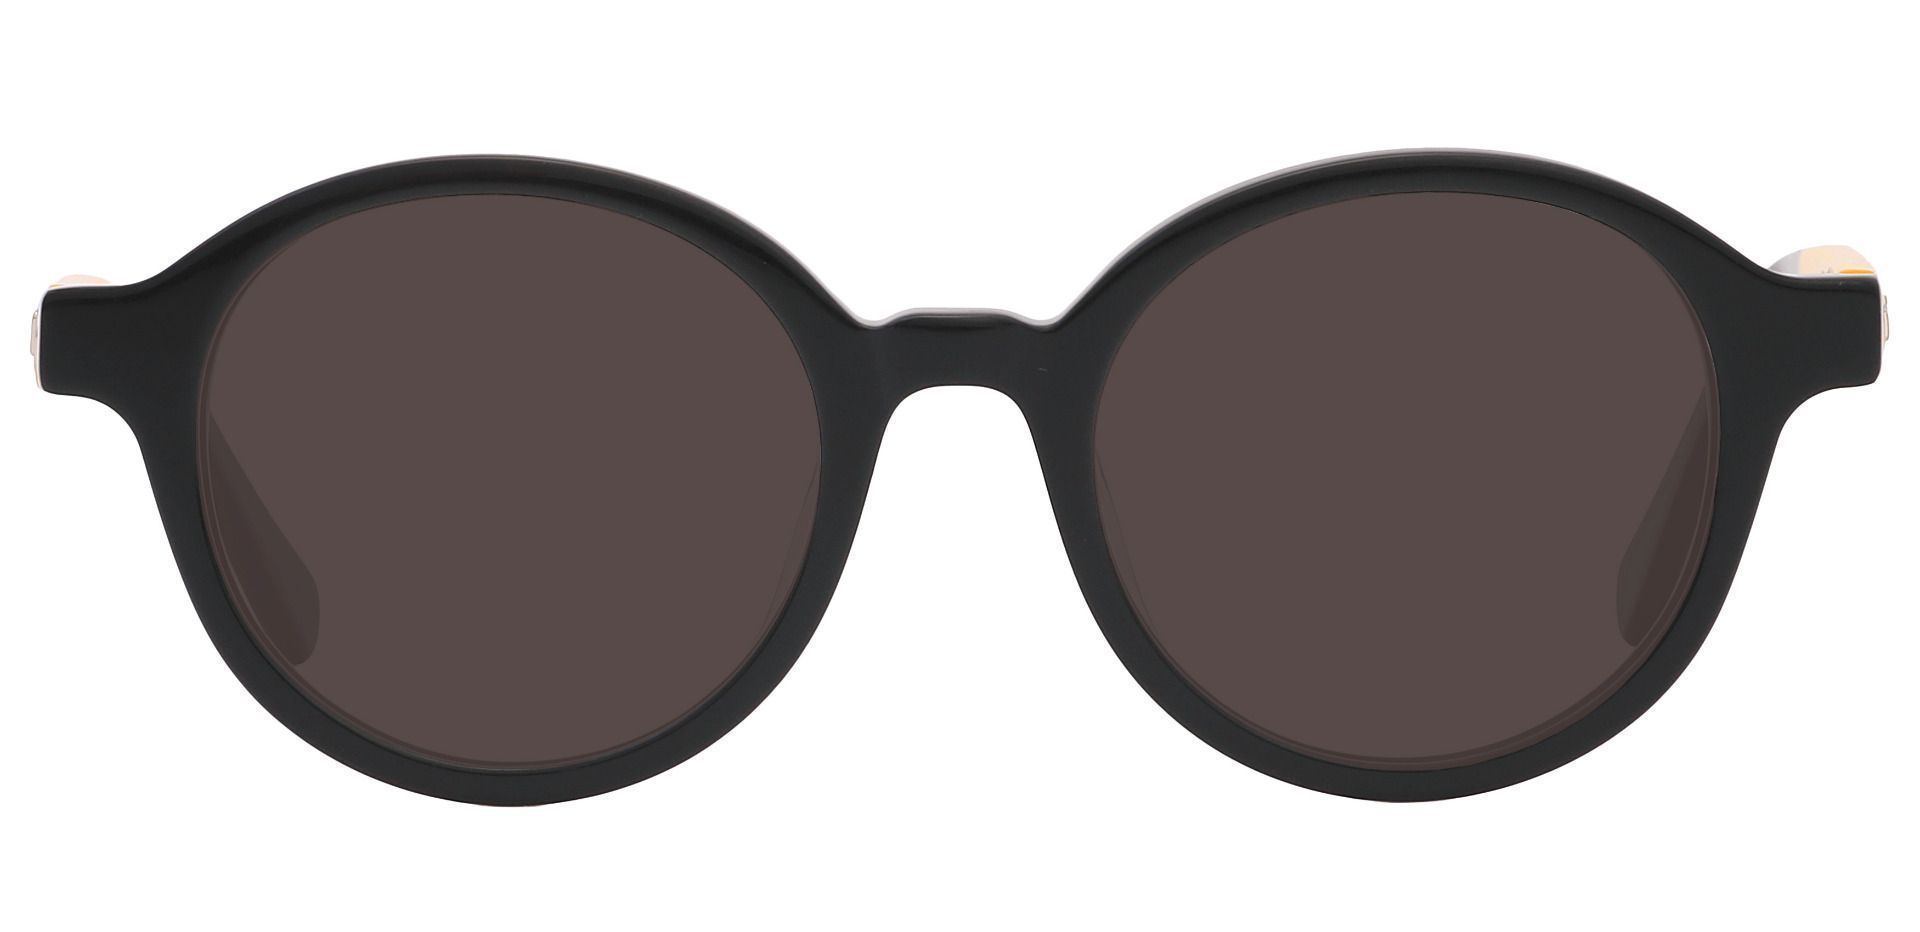 Champ Round Single Vision Sunglasses - Black Frame With Gray Lenses